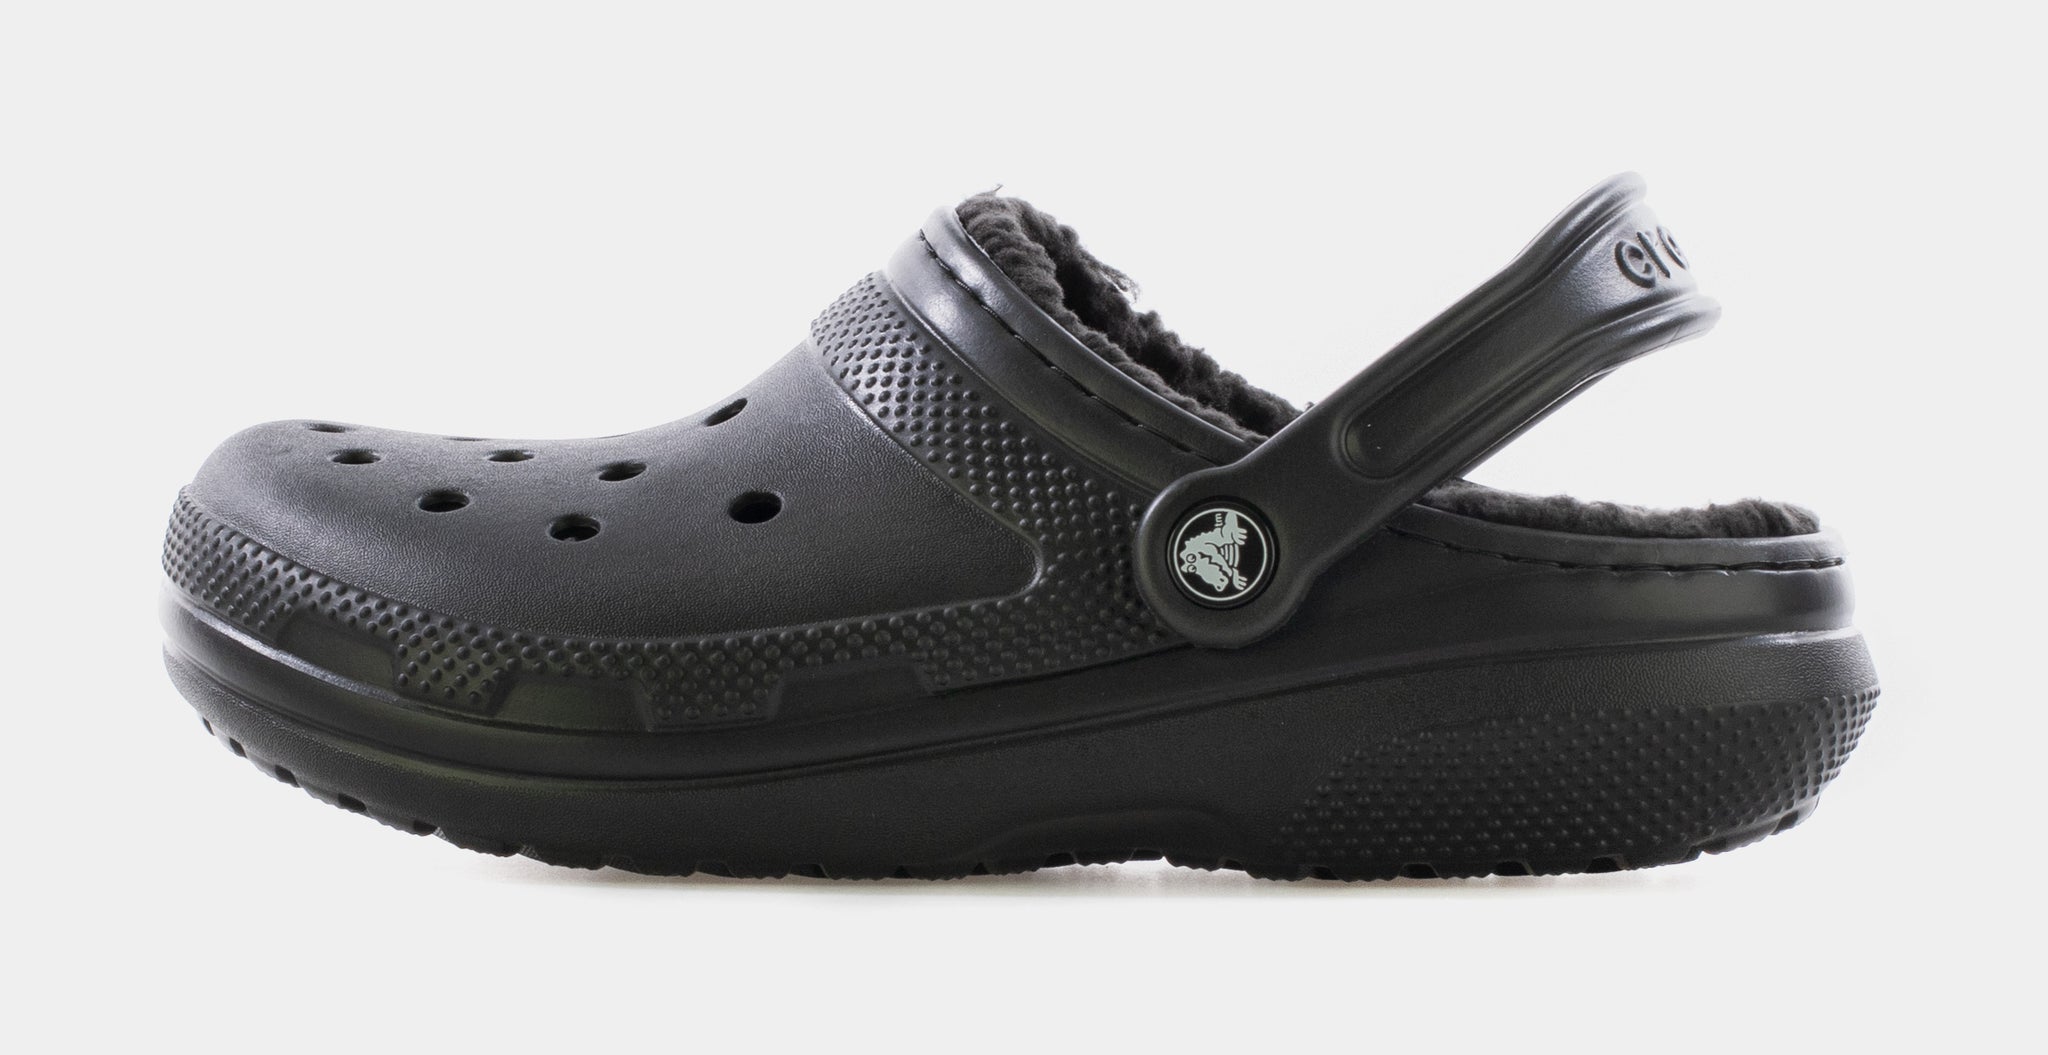 Crocs Classic Lined Clog Black / Black / M11